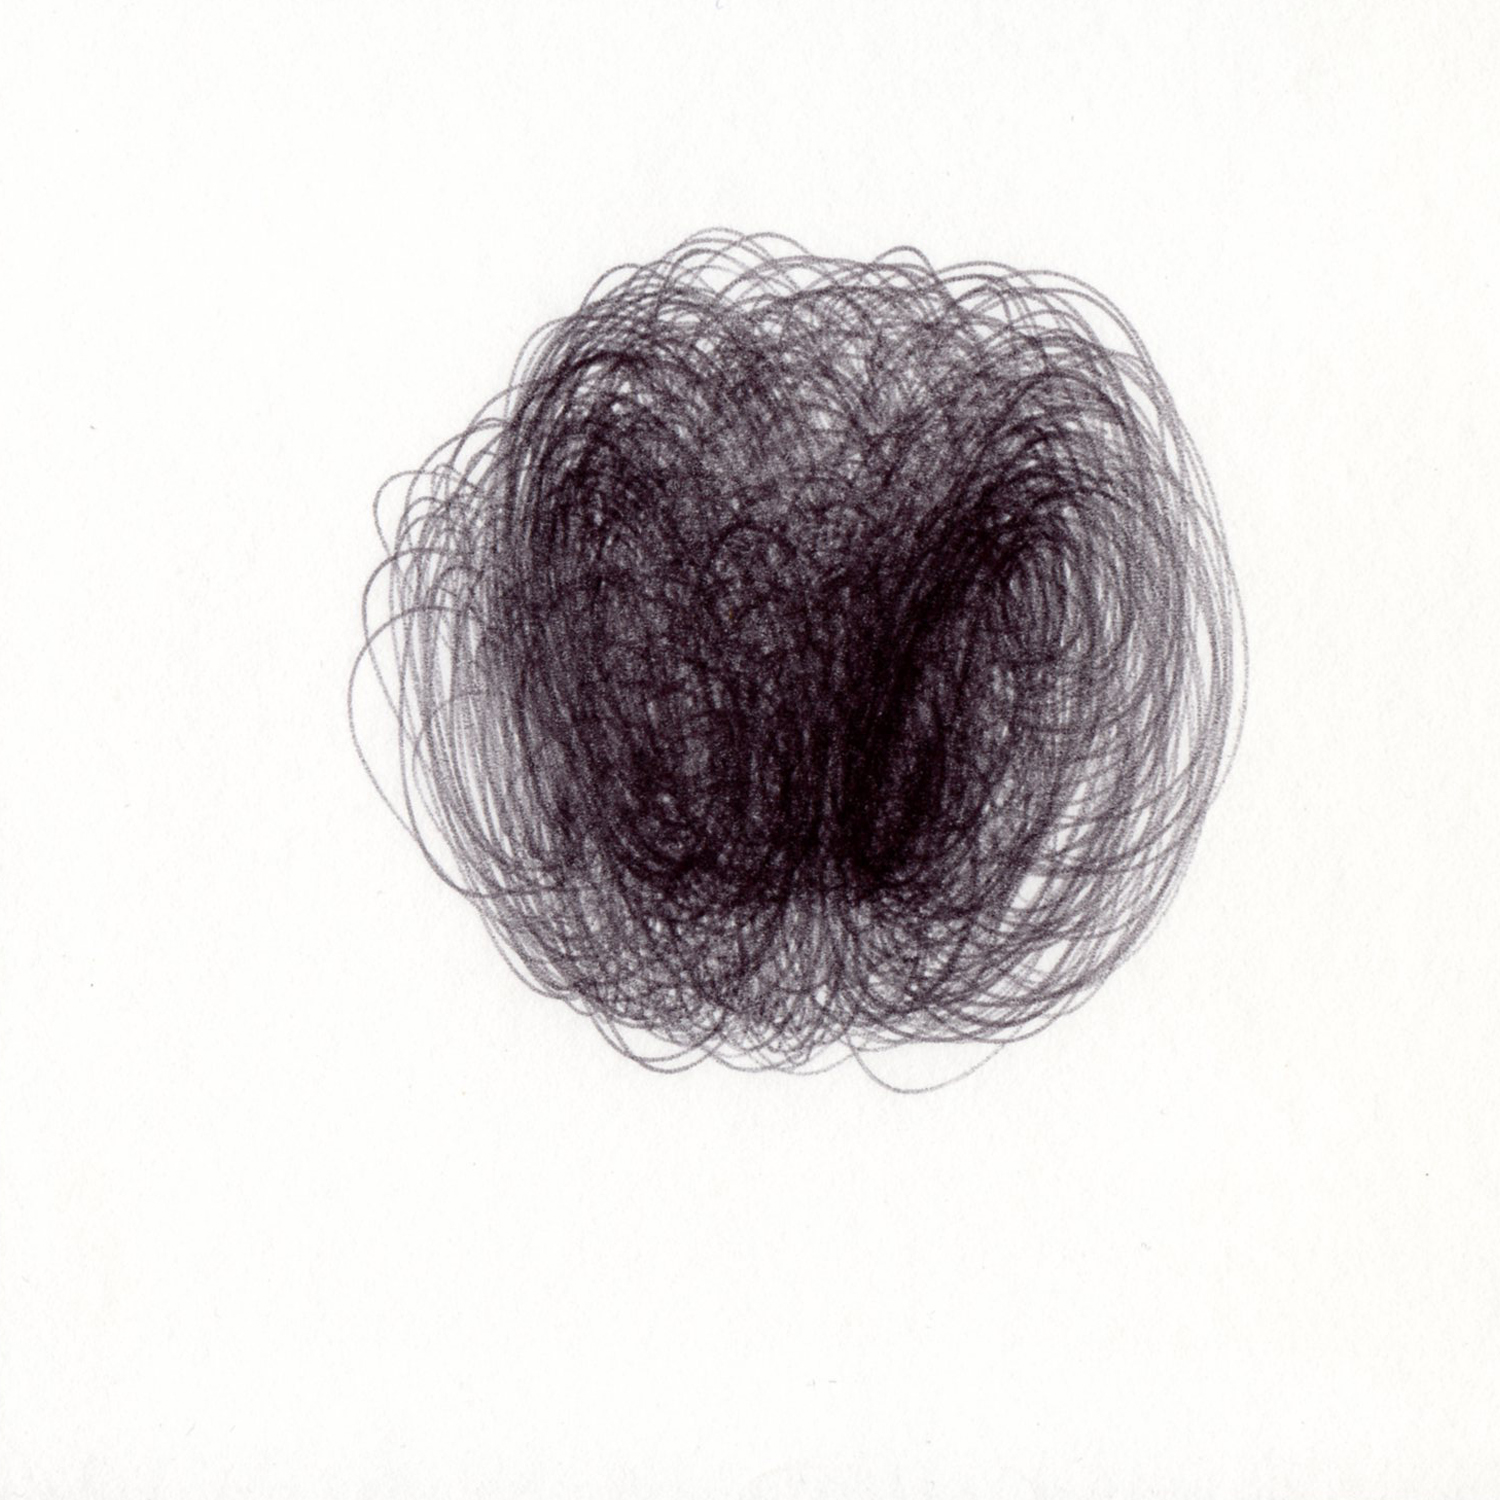   blob 4  pen on paper 5” x 5” 2014 